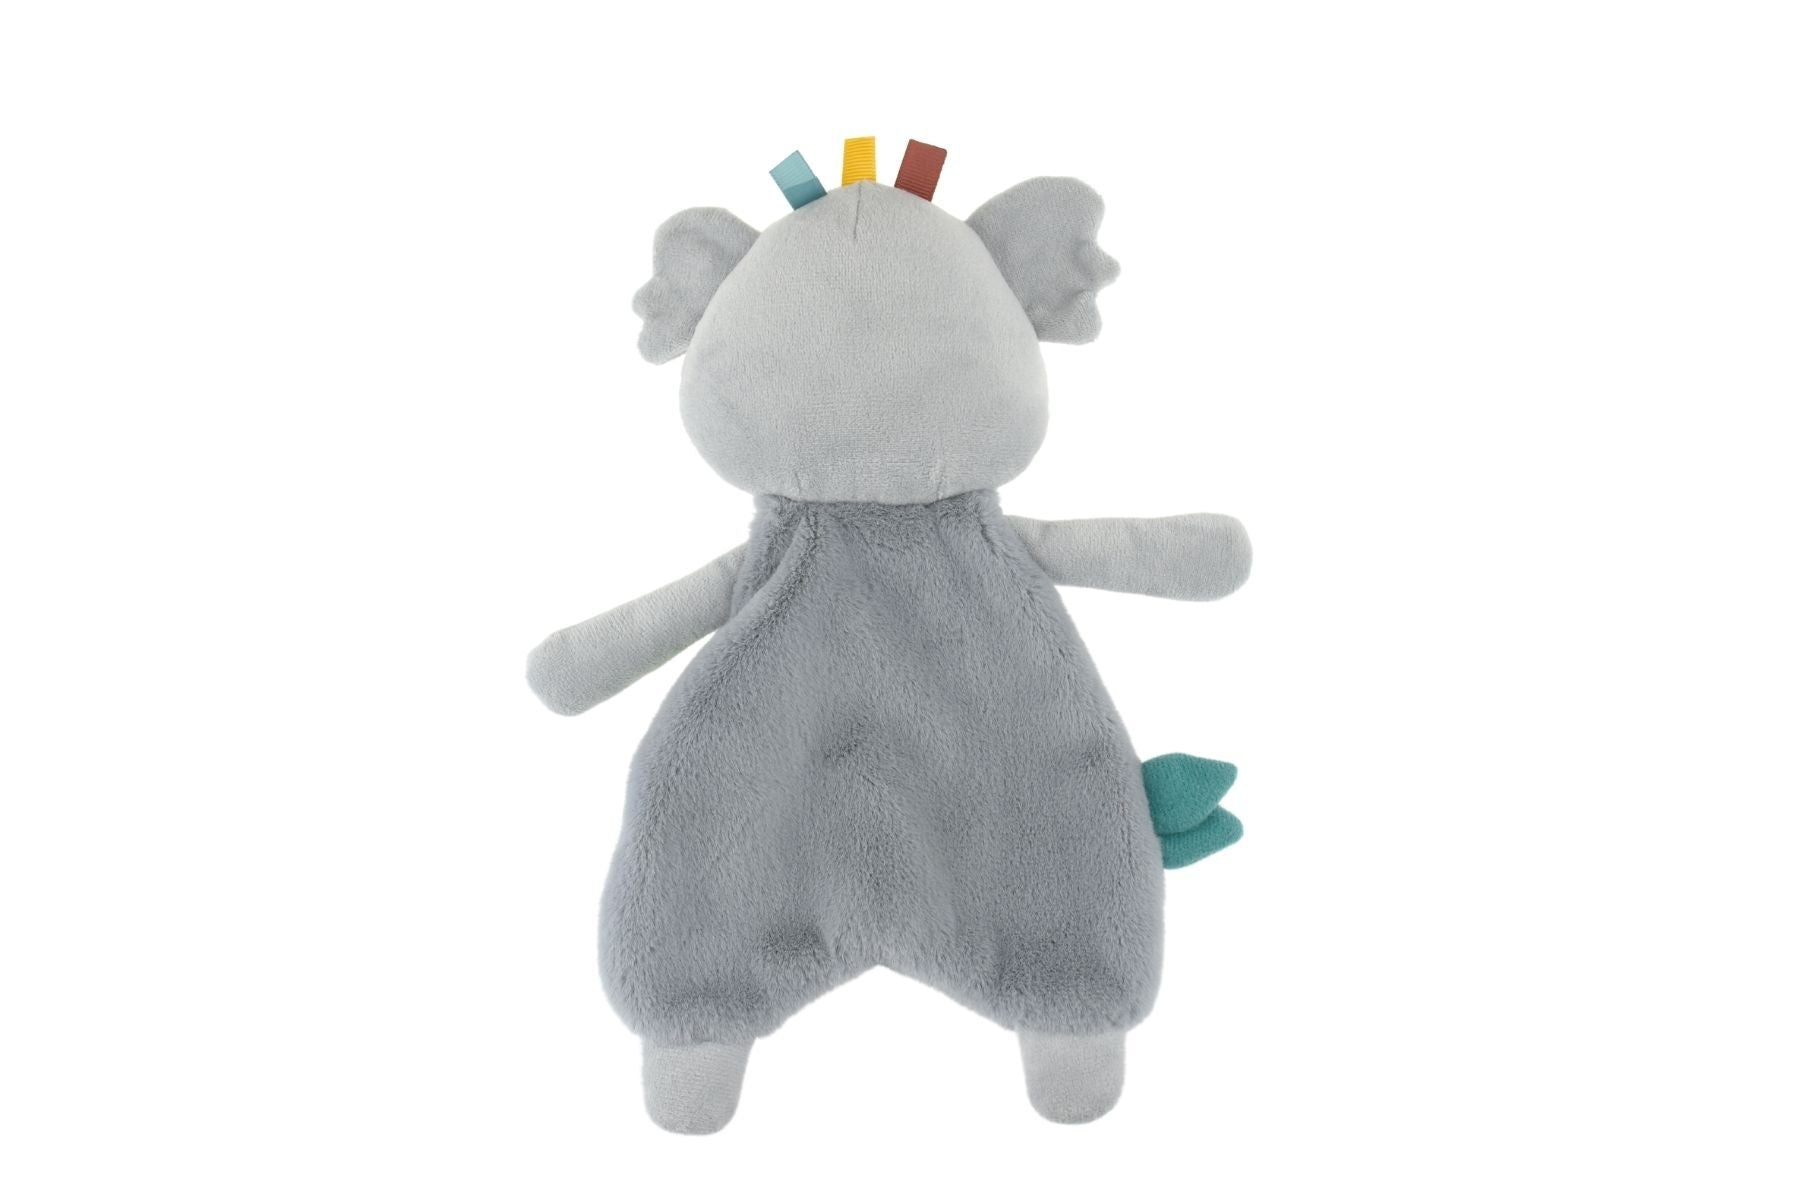 Snuggle Buddy Kuddly Koala Soft Snuggler